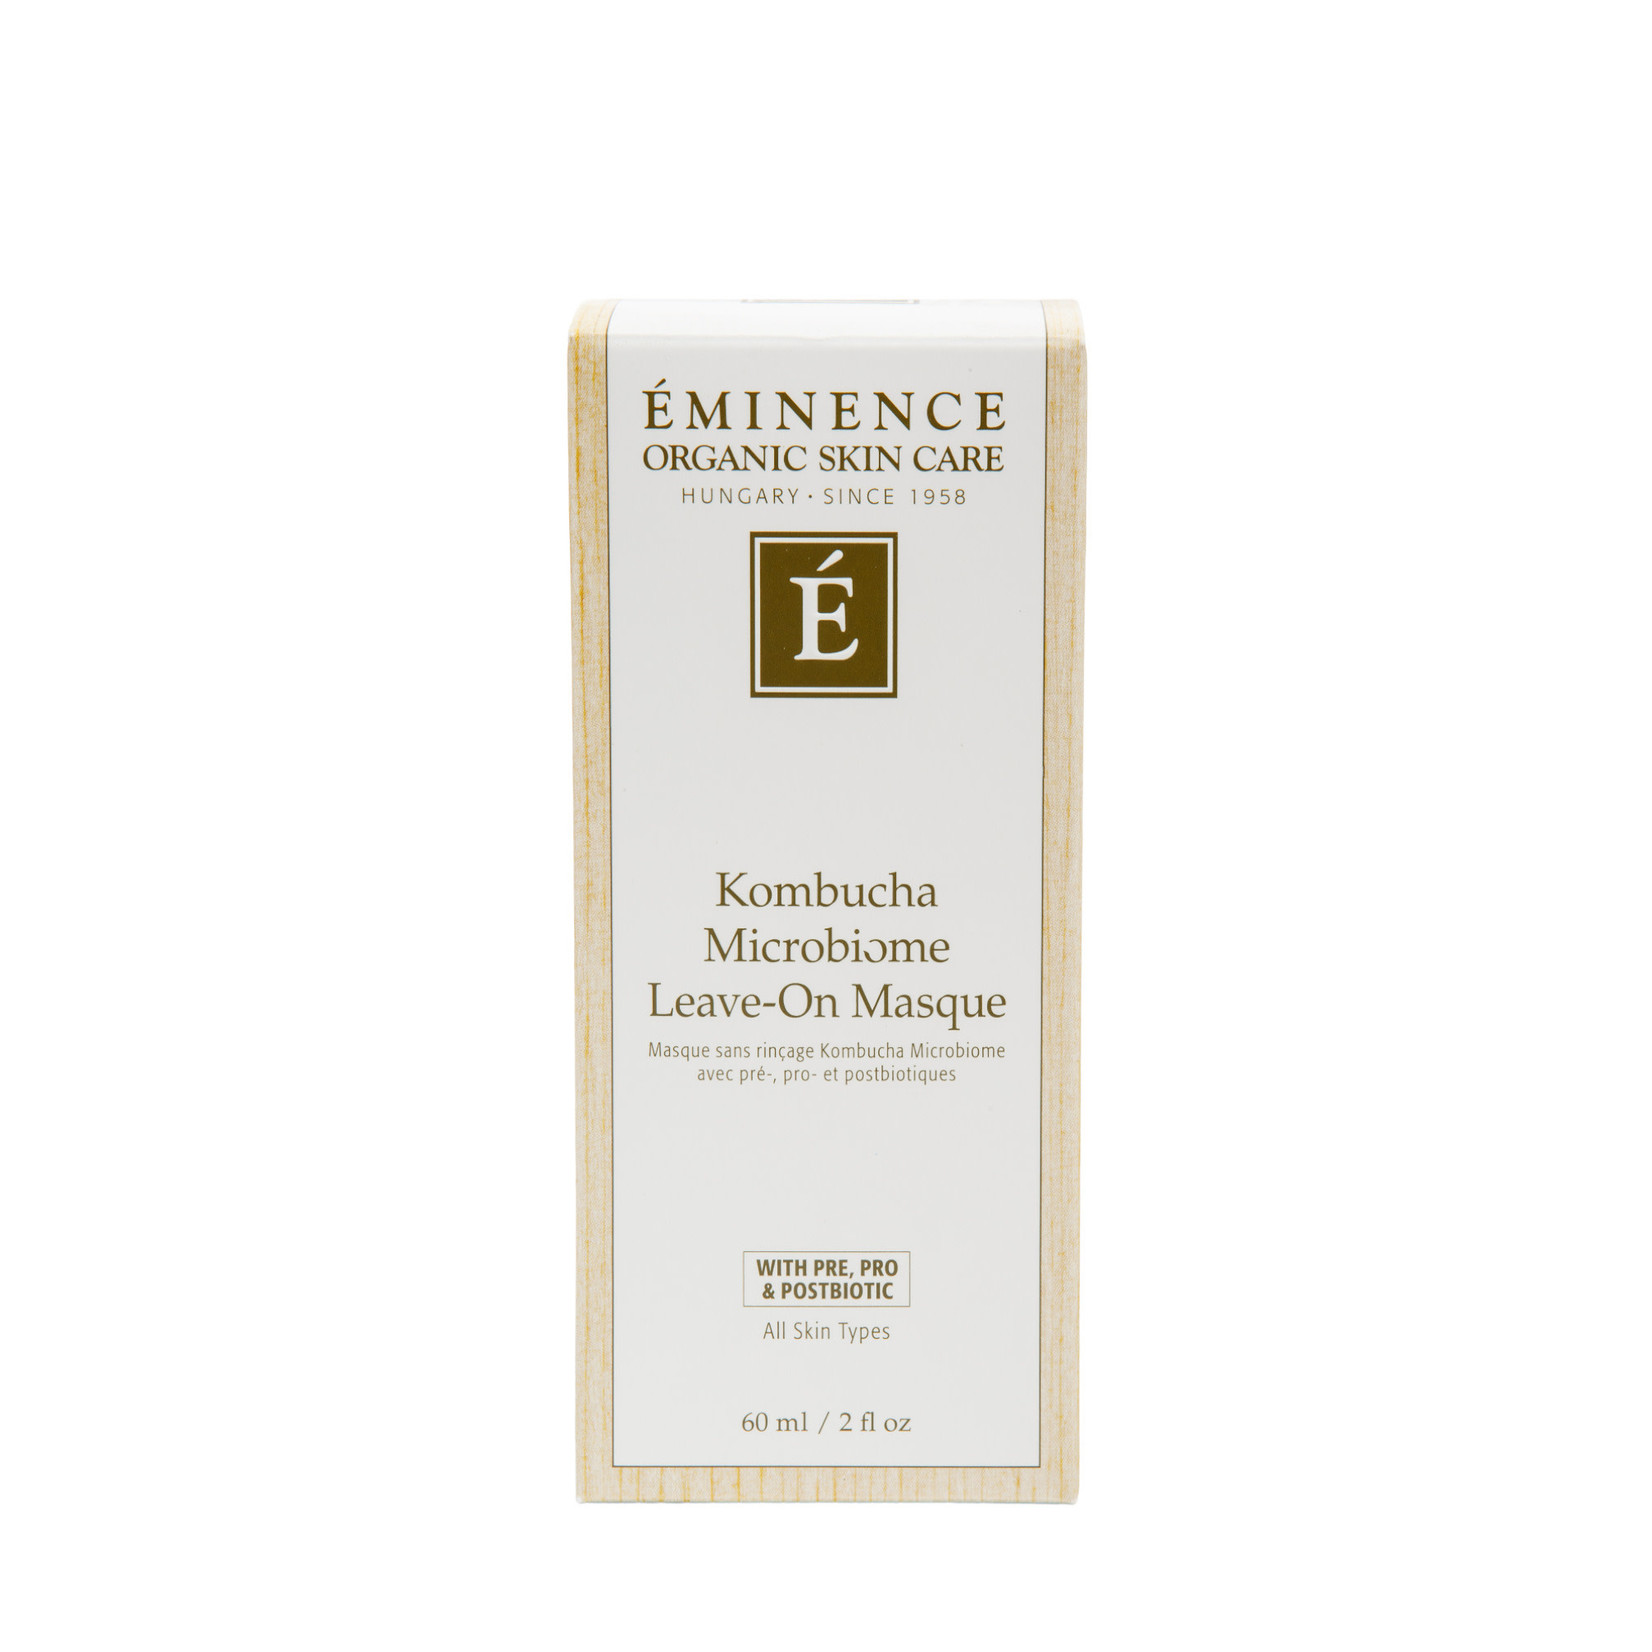 Eminence Kombucha Microbiome Leave-On Masque 2oz Eminence